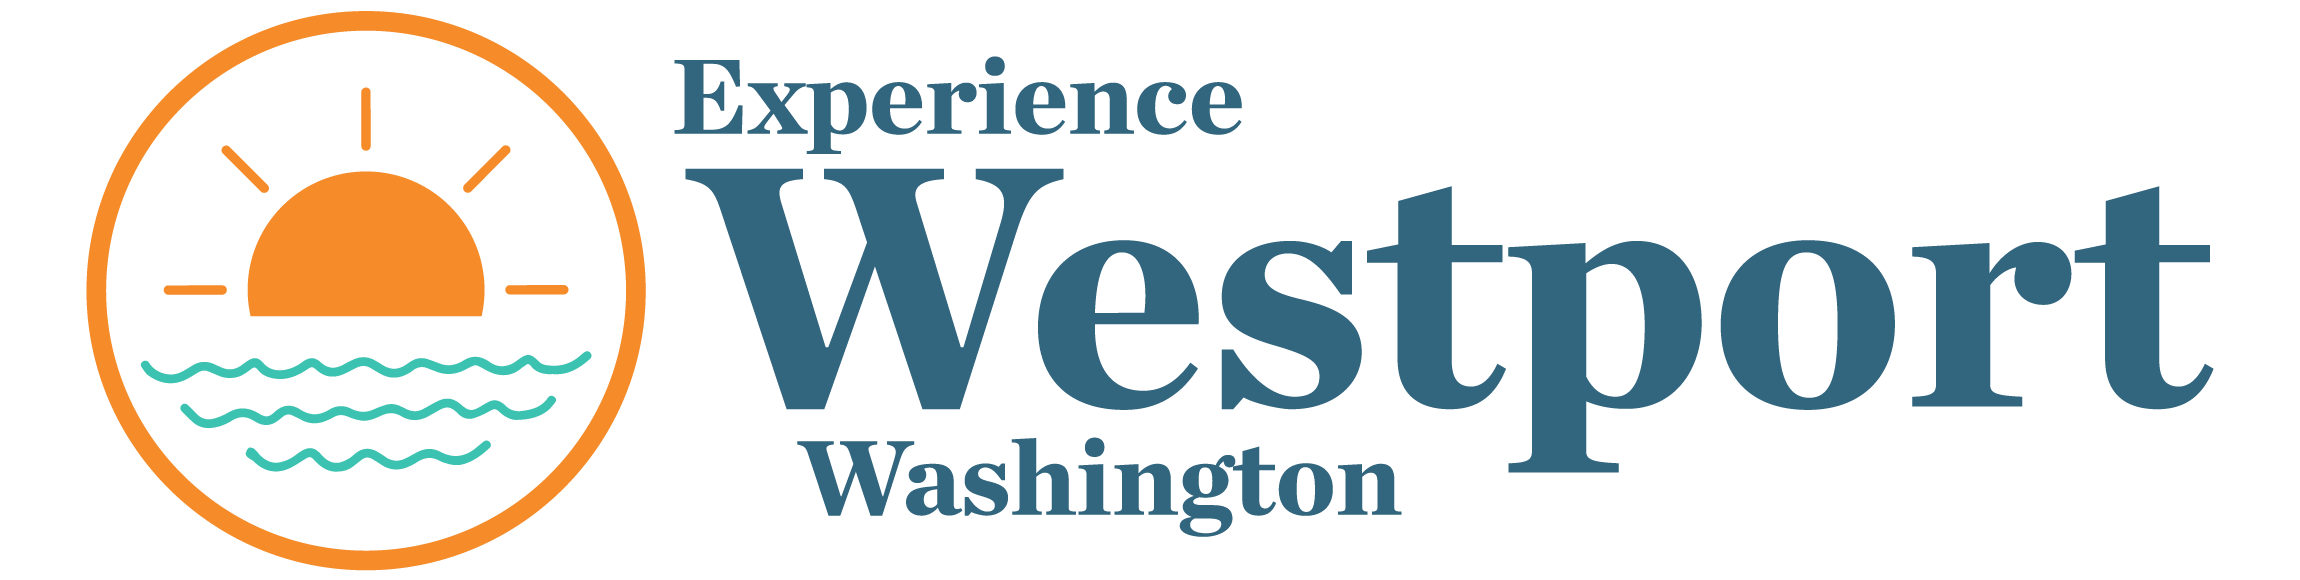 Experience Westport, Washington